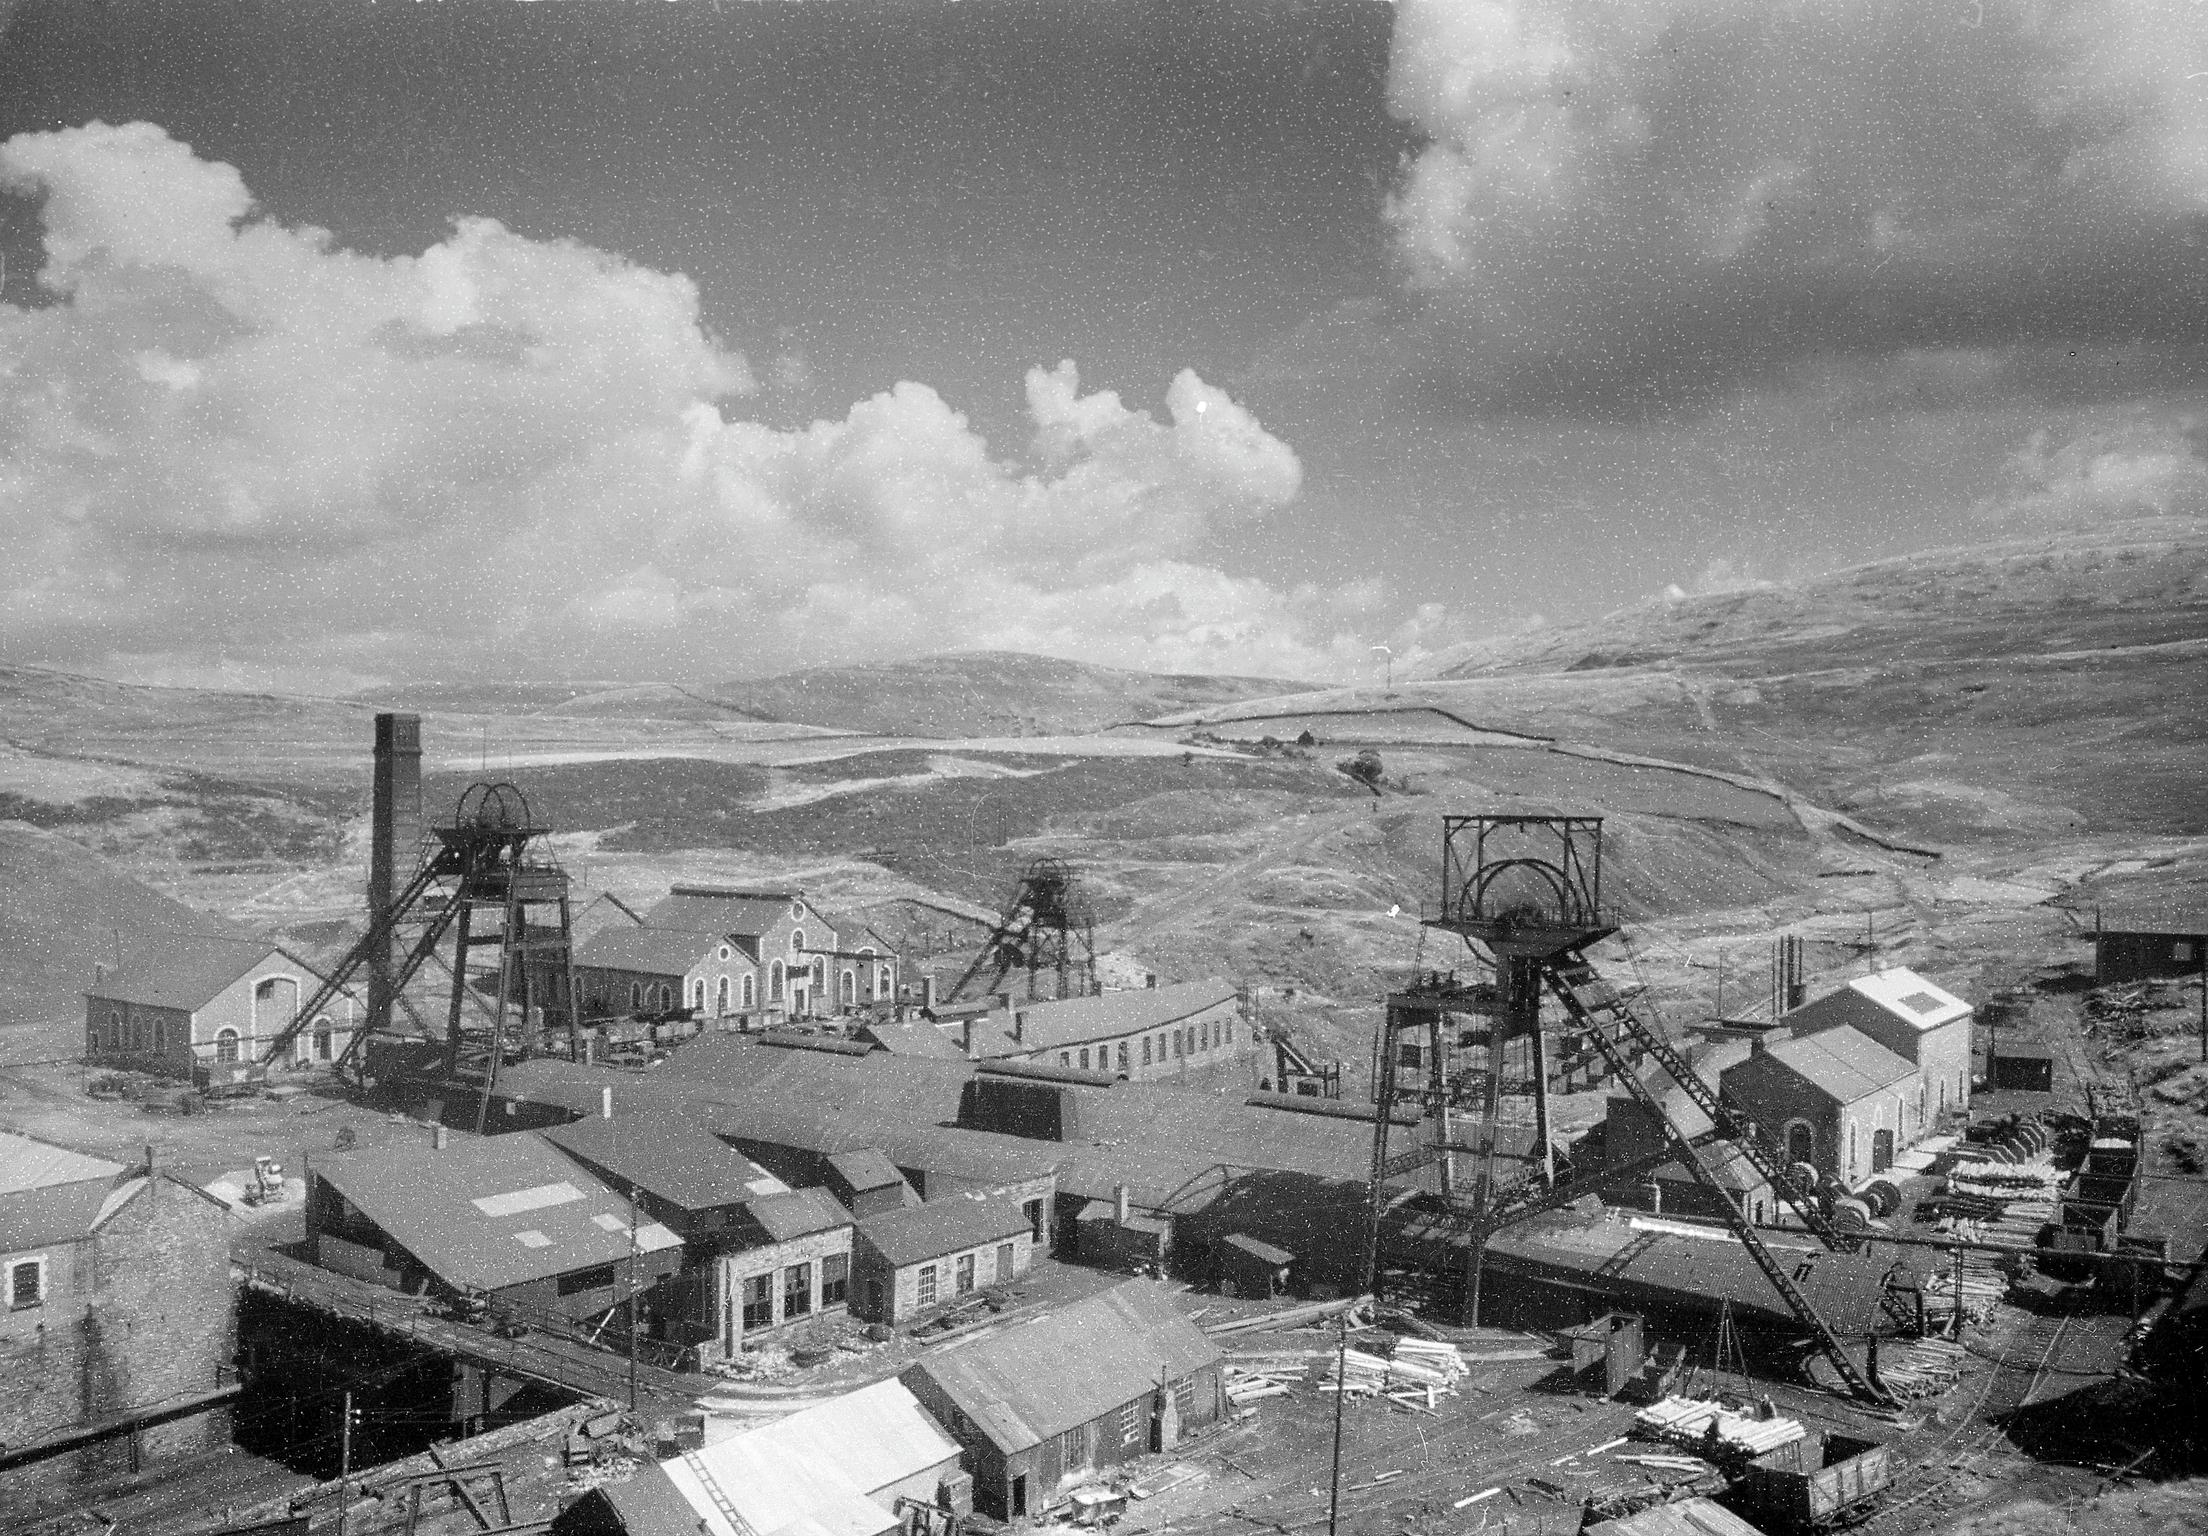 Caerau Colliery, film negative